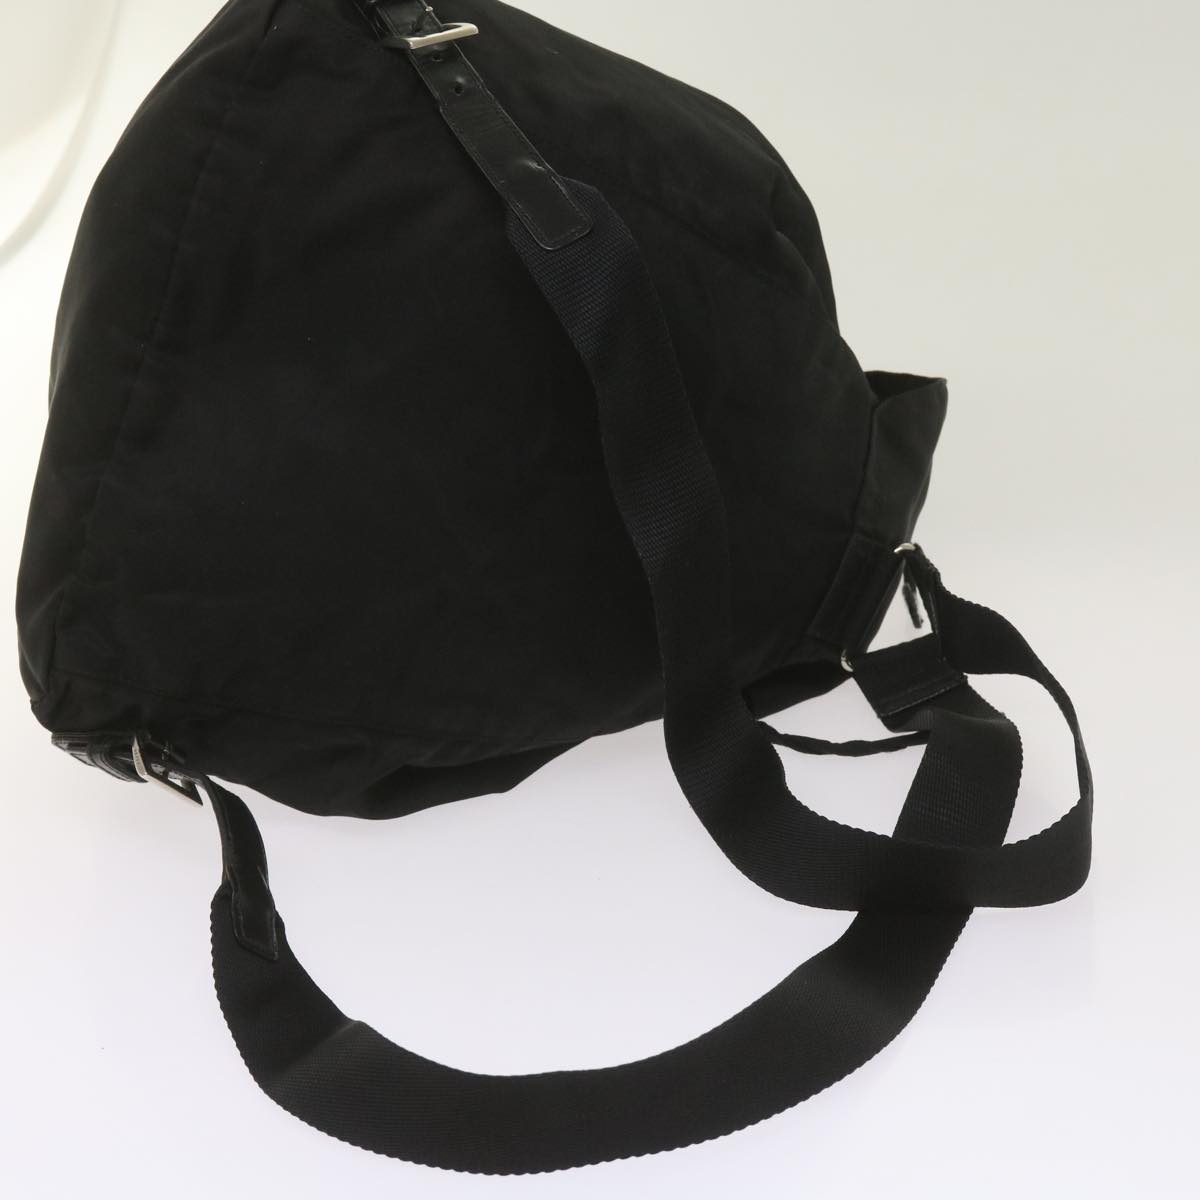 PRADA Backpack Nylon Black Auth bs12028